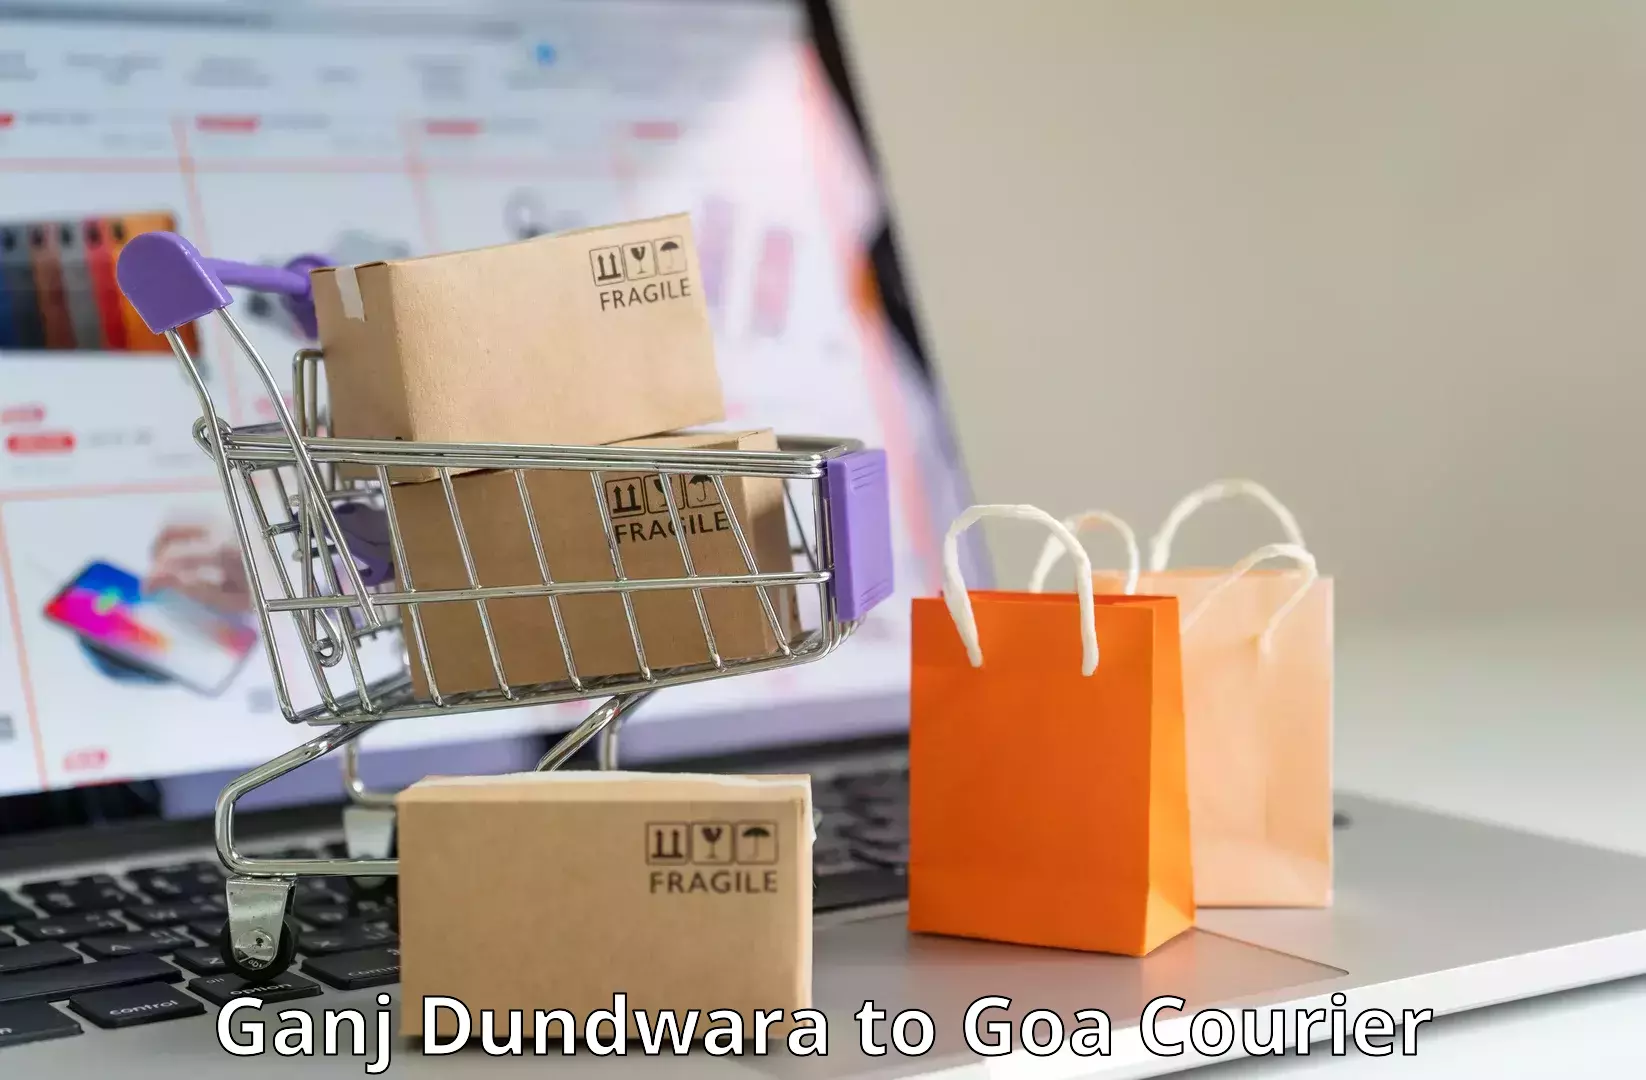 Next-day delivery options Ganj Dundwara to Panjim